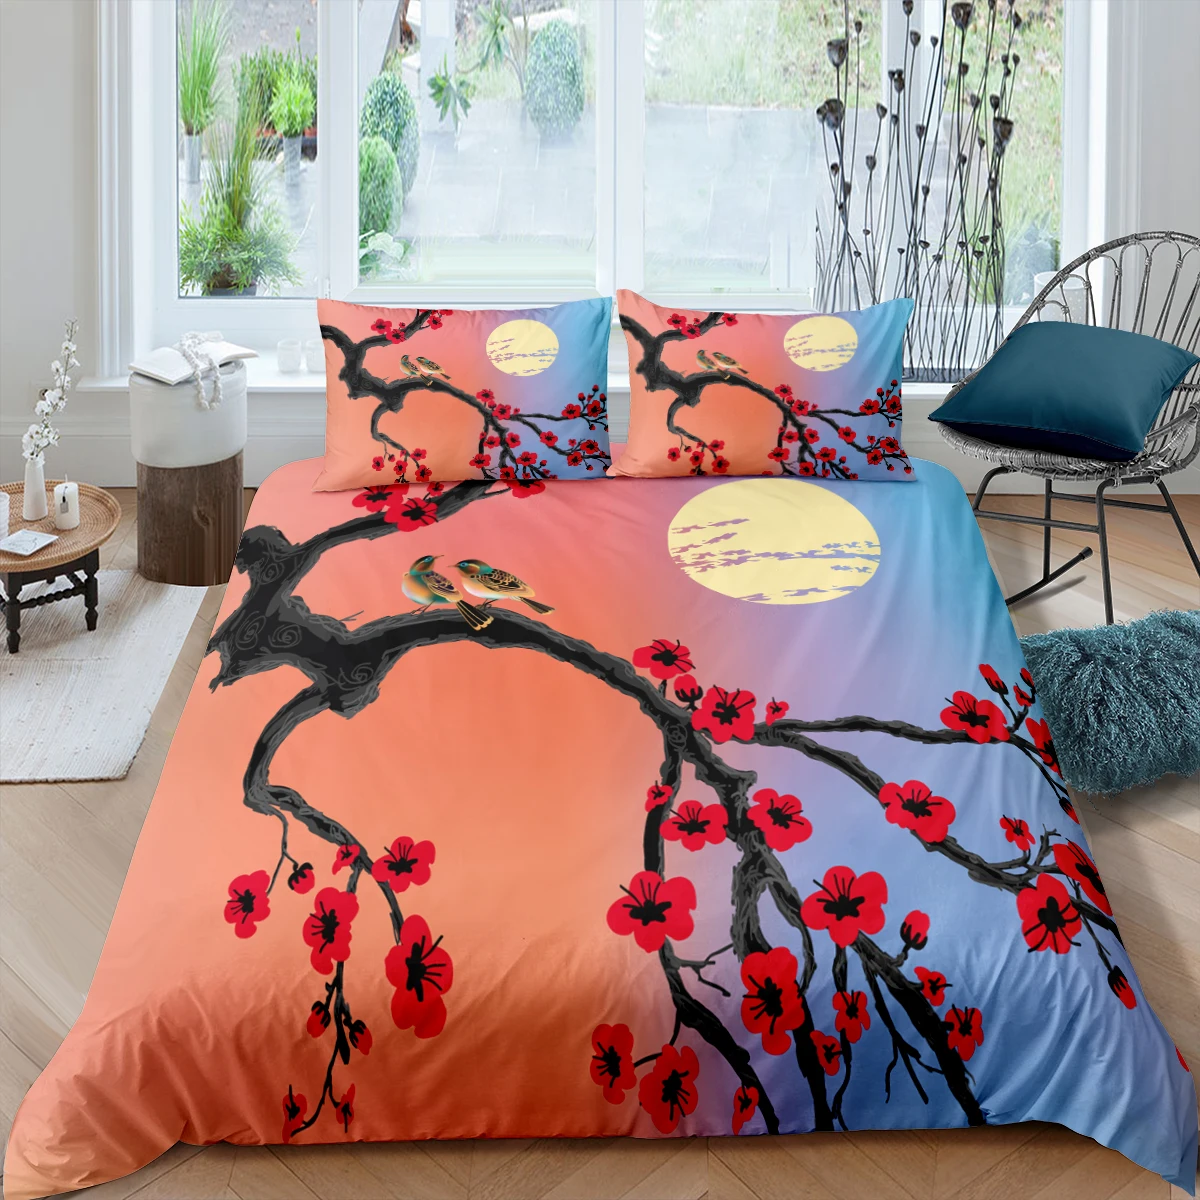 Home Textiles Luxury 3D Cherry Blossoms Duvet Cover Set Pillowcase Moon Bedding Set AU/EU/UK/US Queen and King Size Sets 